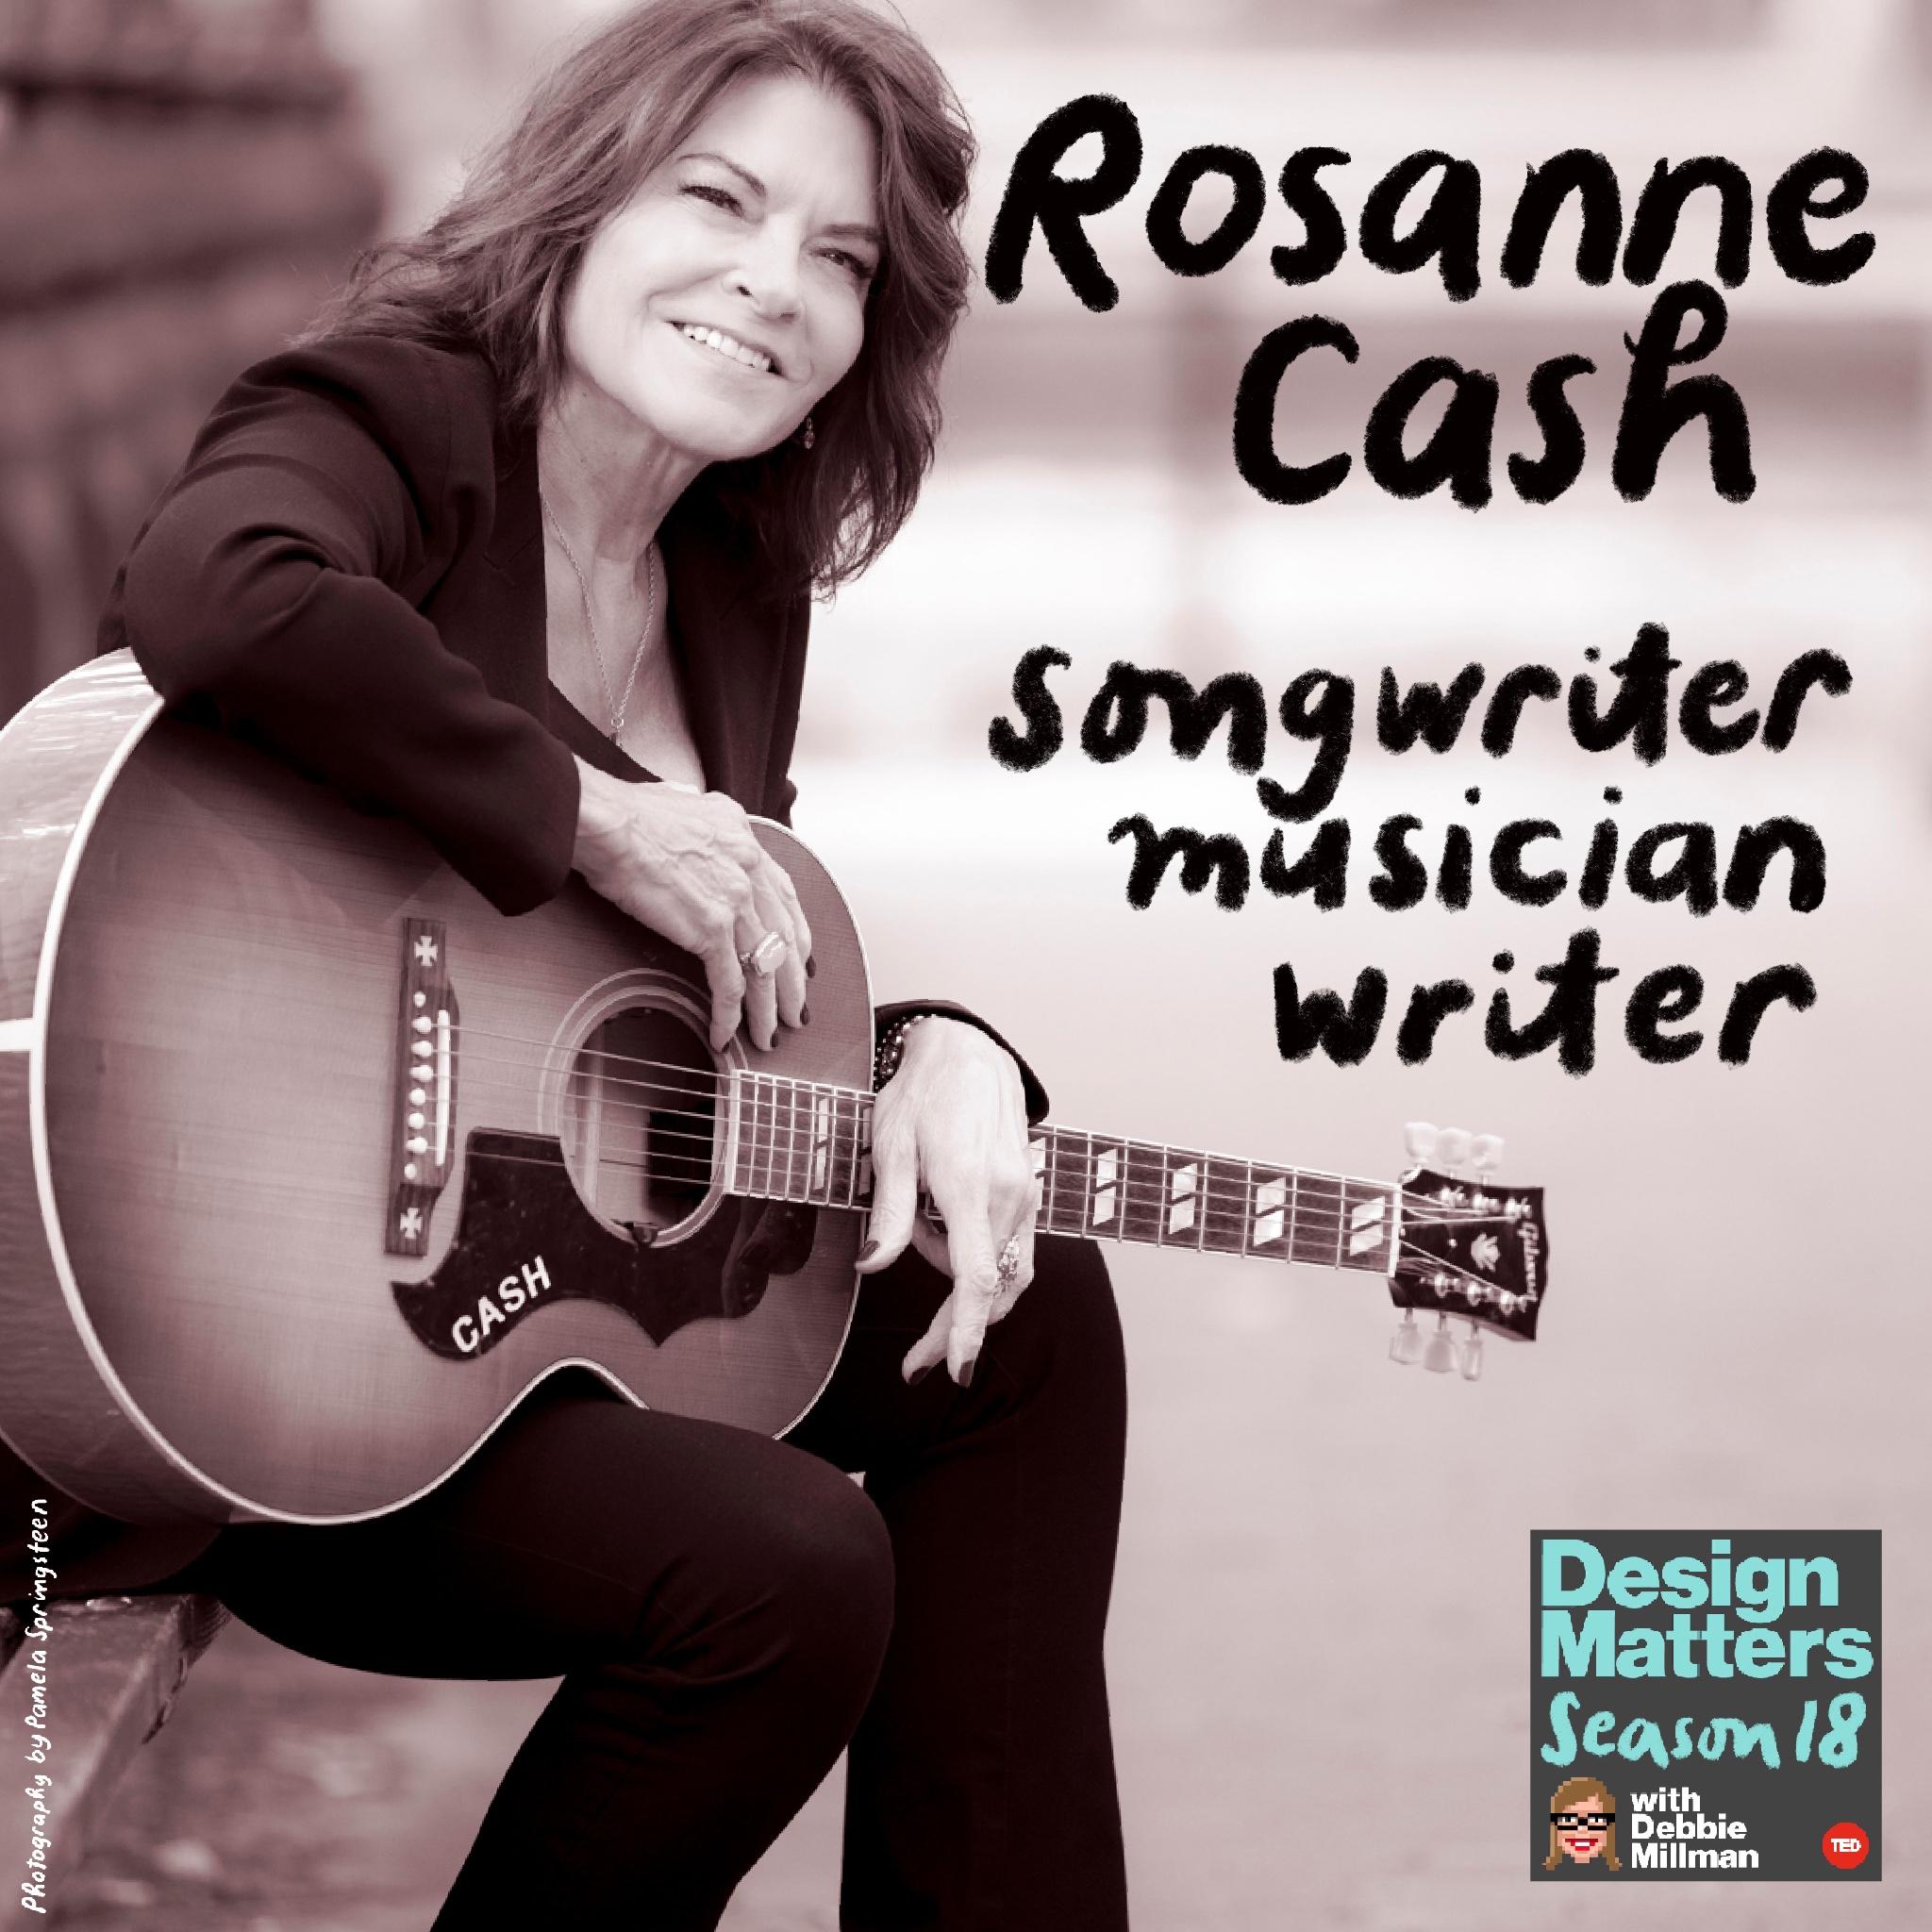 Thumbnail for "Best of Design Matters: Rosanne Cash".